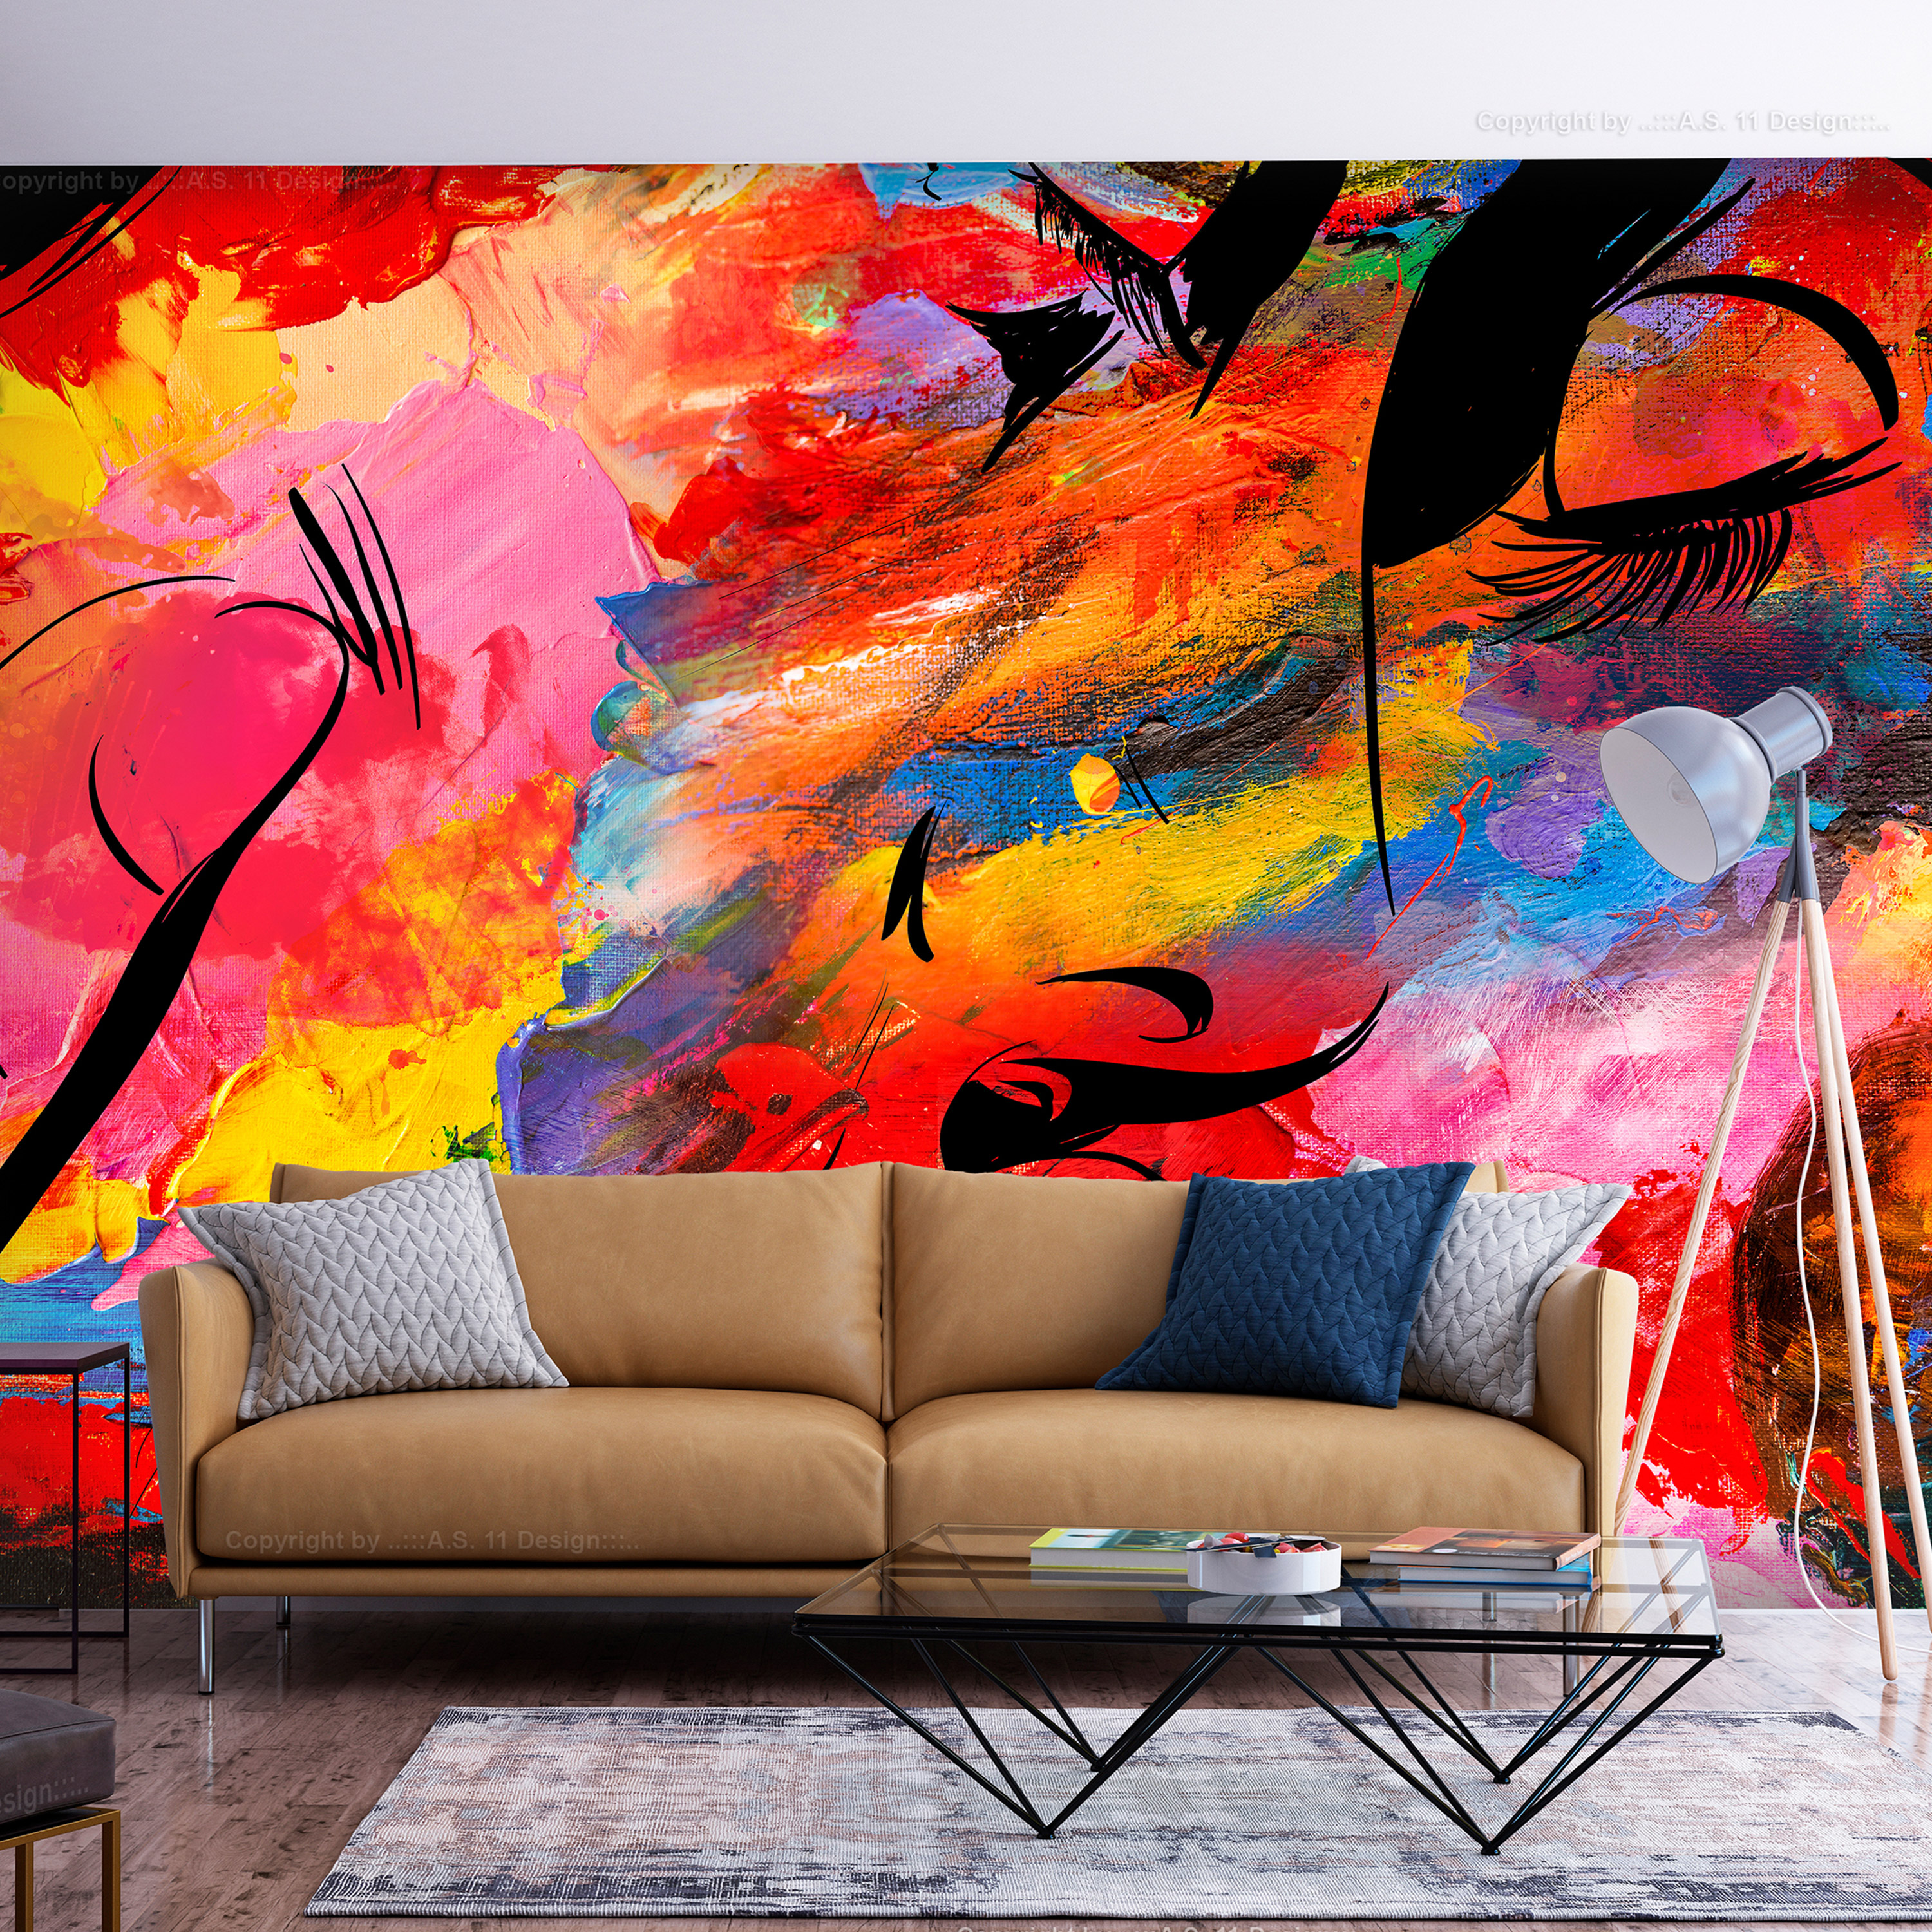 Self-adhesive Wallpaper - Love Story - 441x315